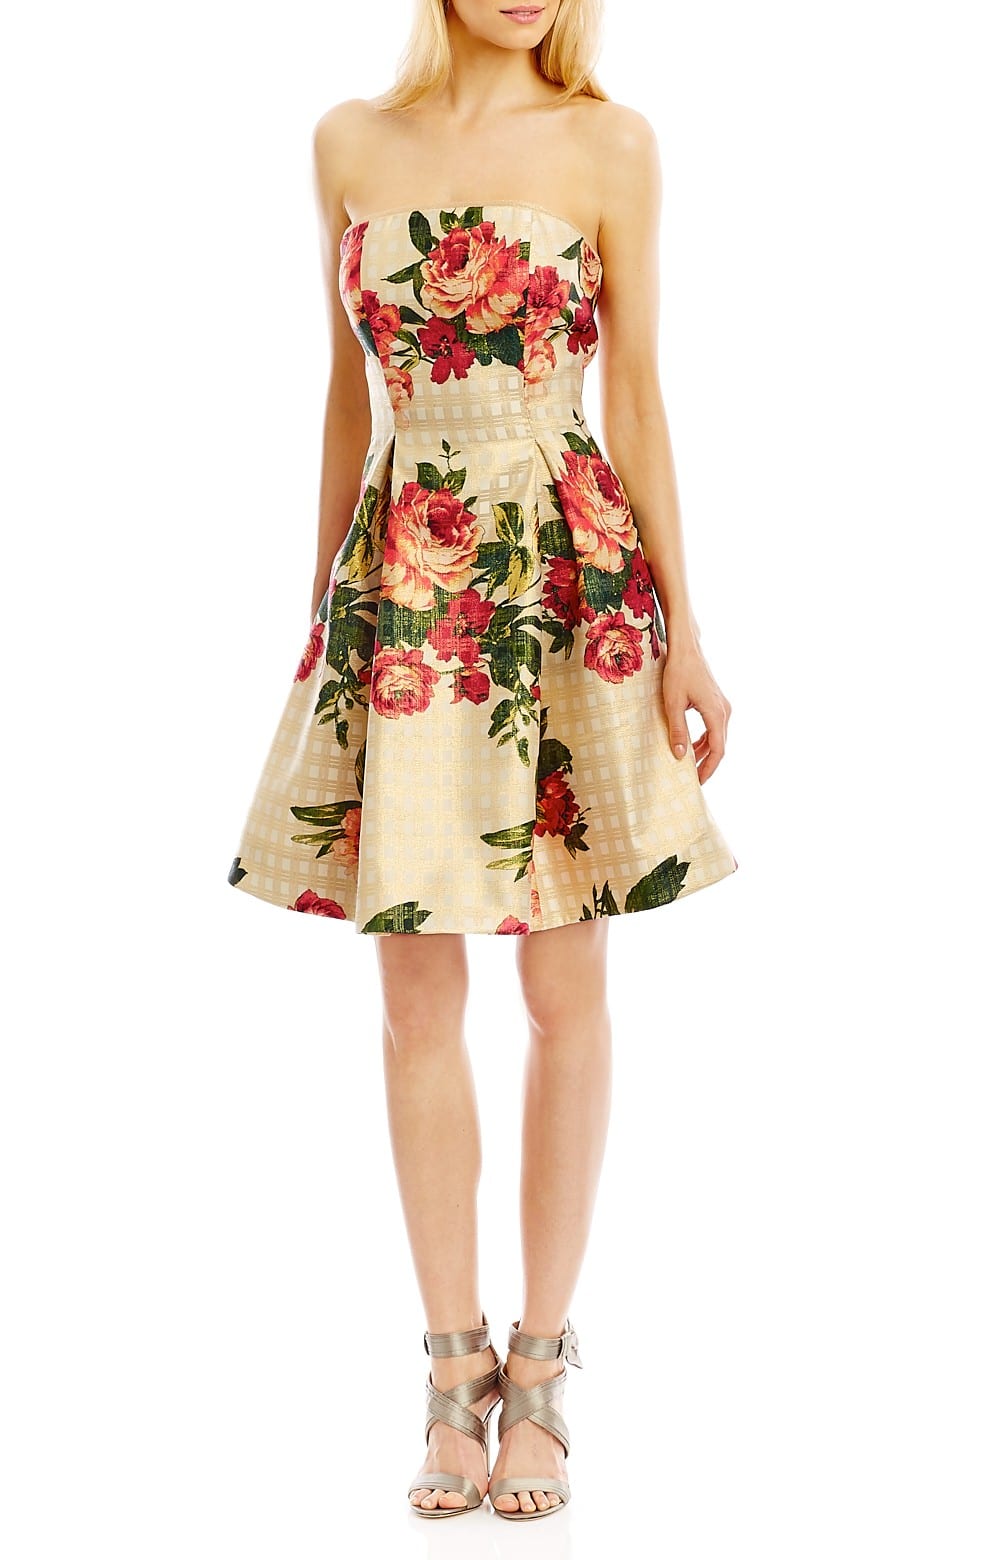 floral cream dress